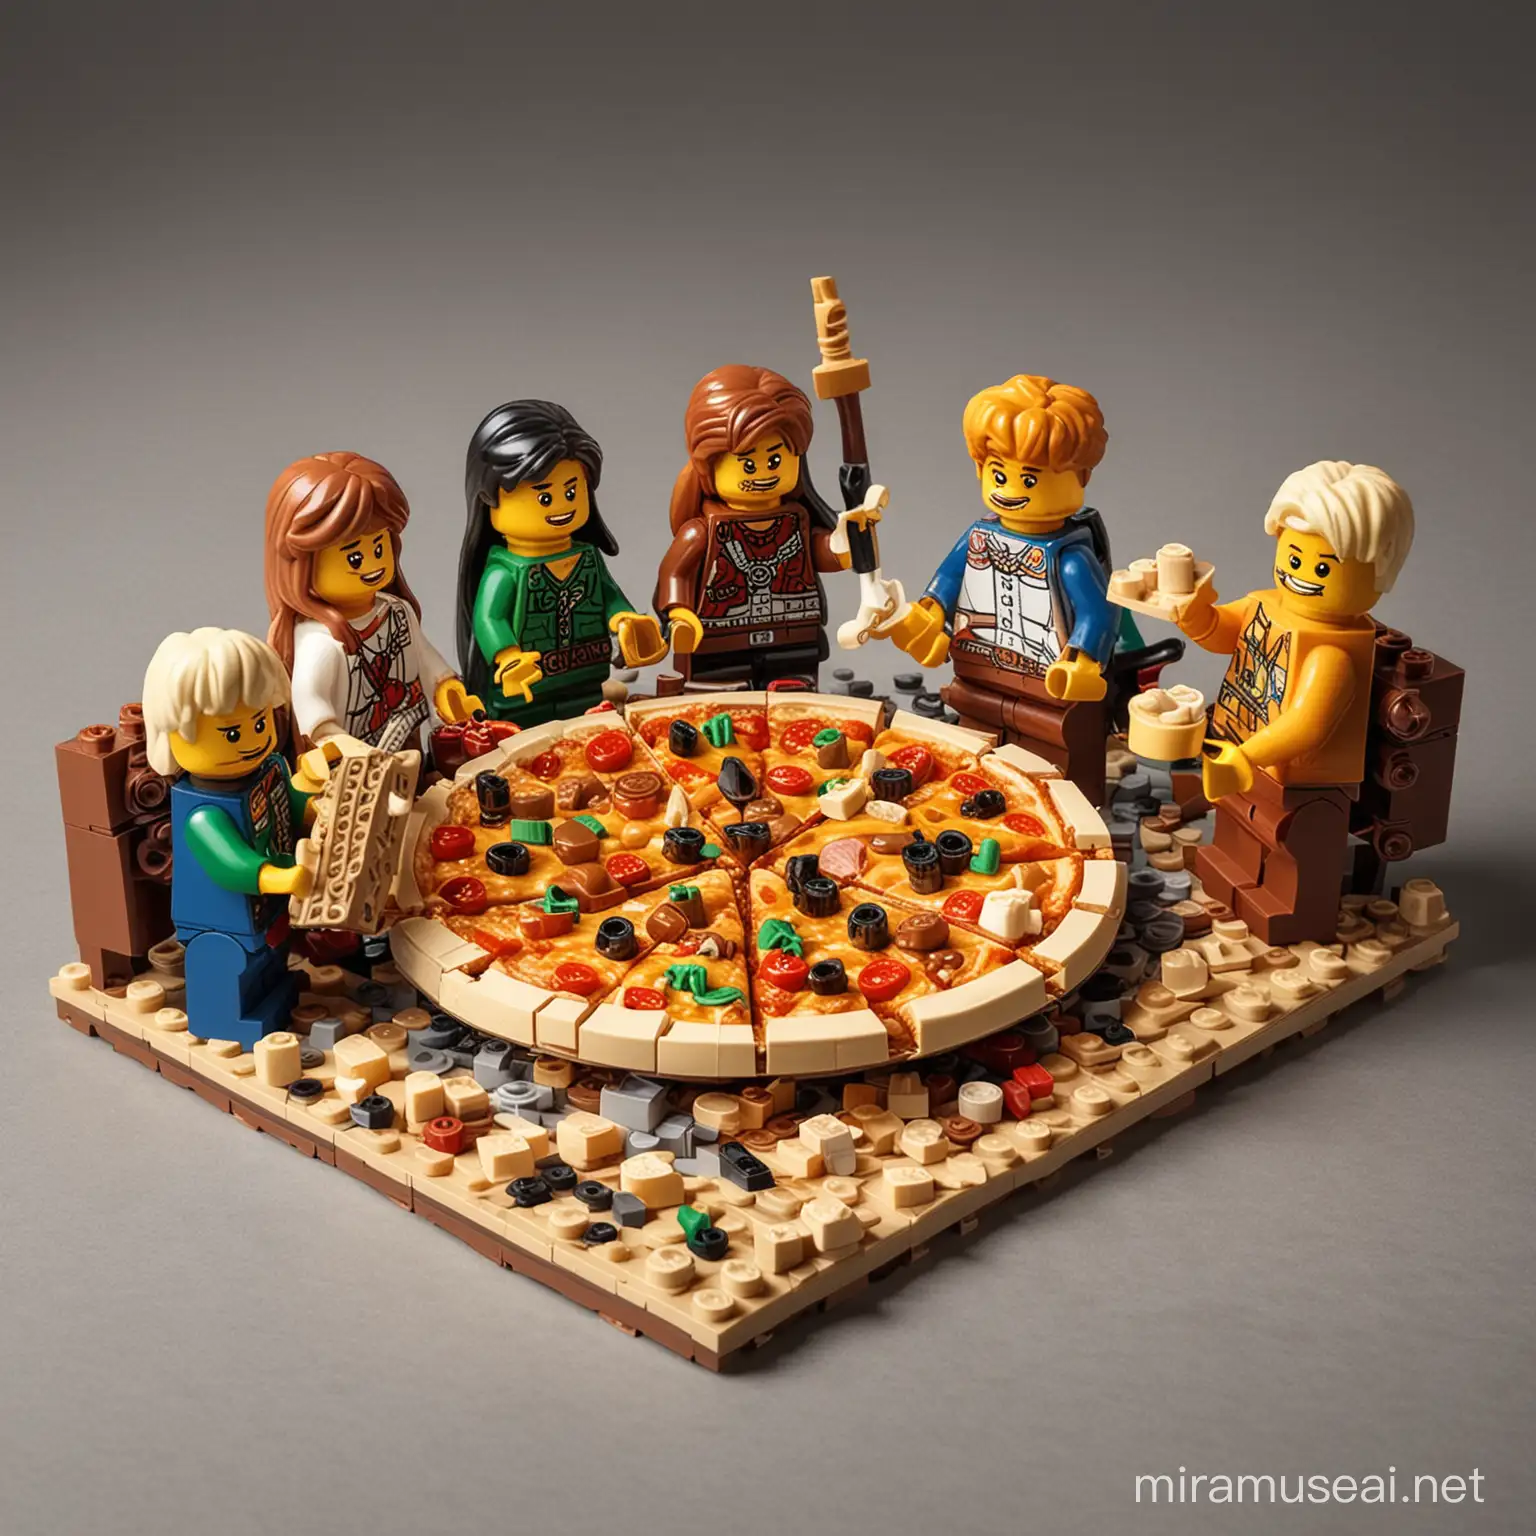 Lego Characters Enjoying Pizza Fun Musical Group Scene